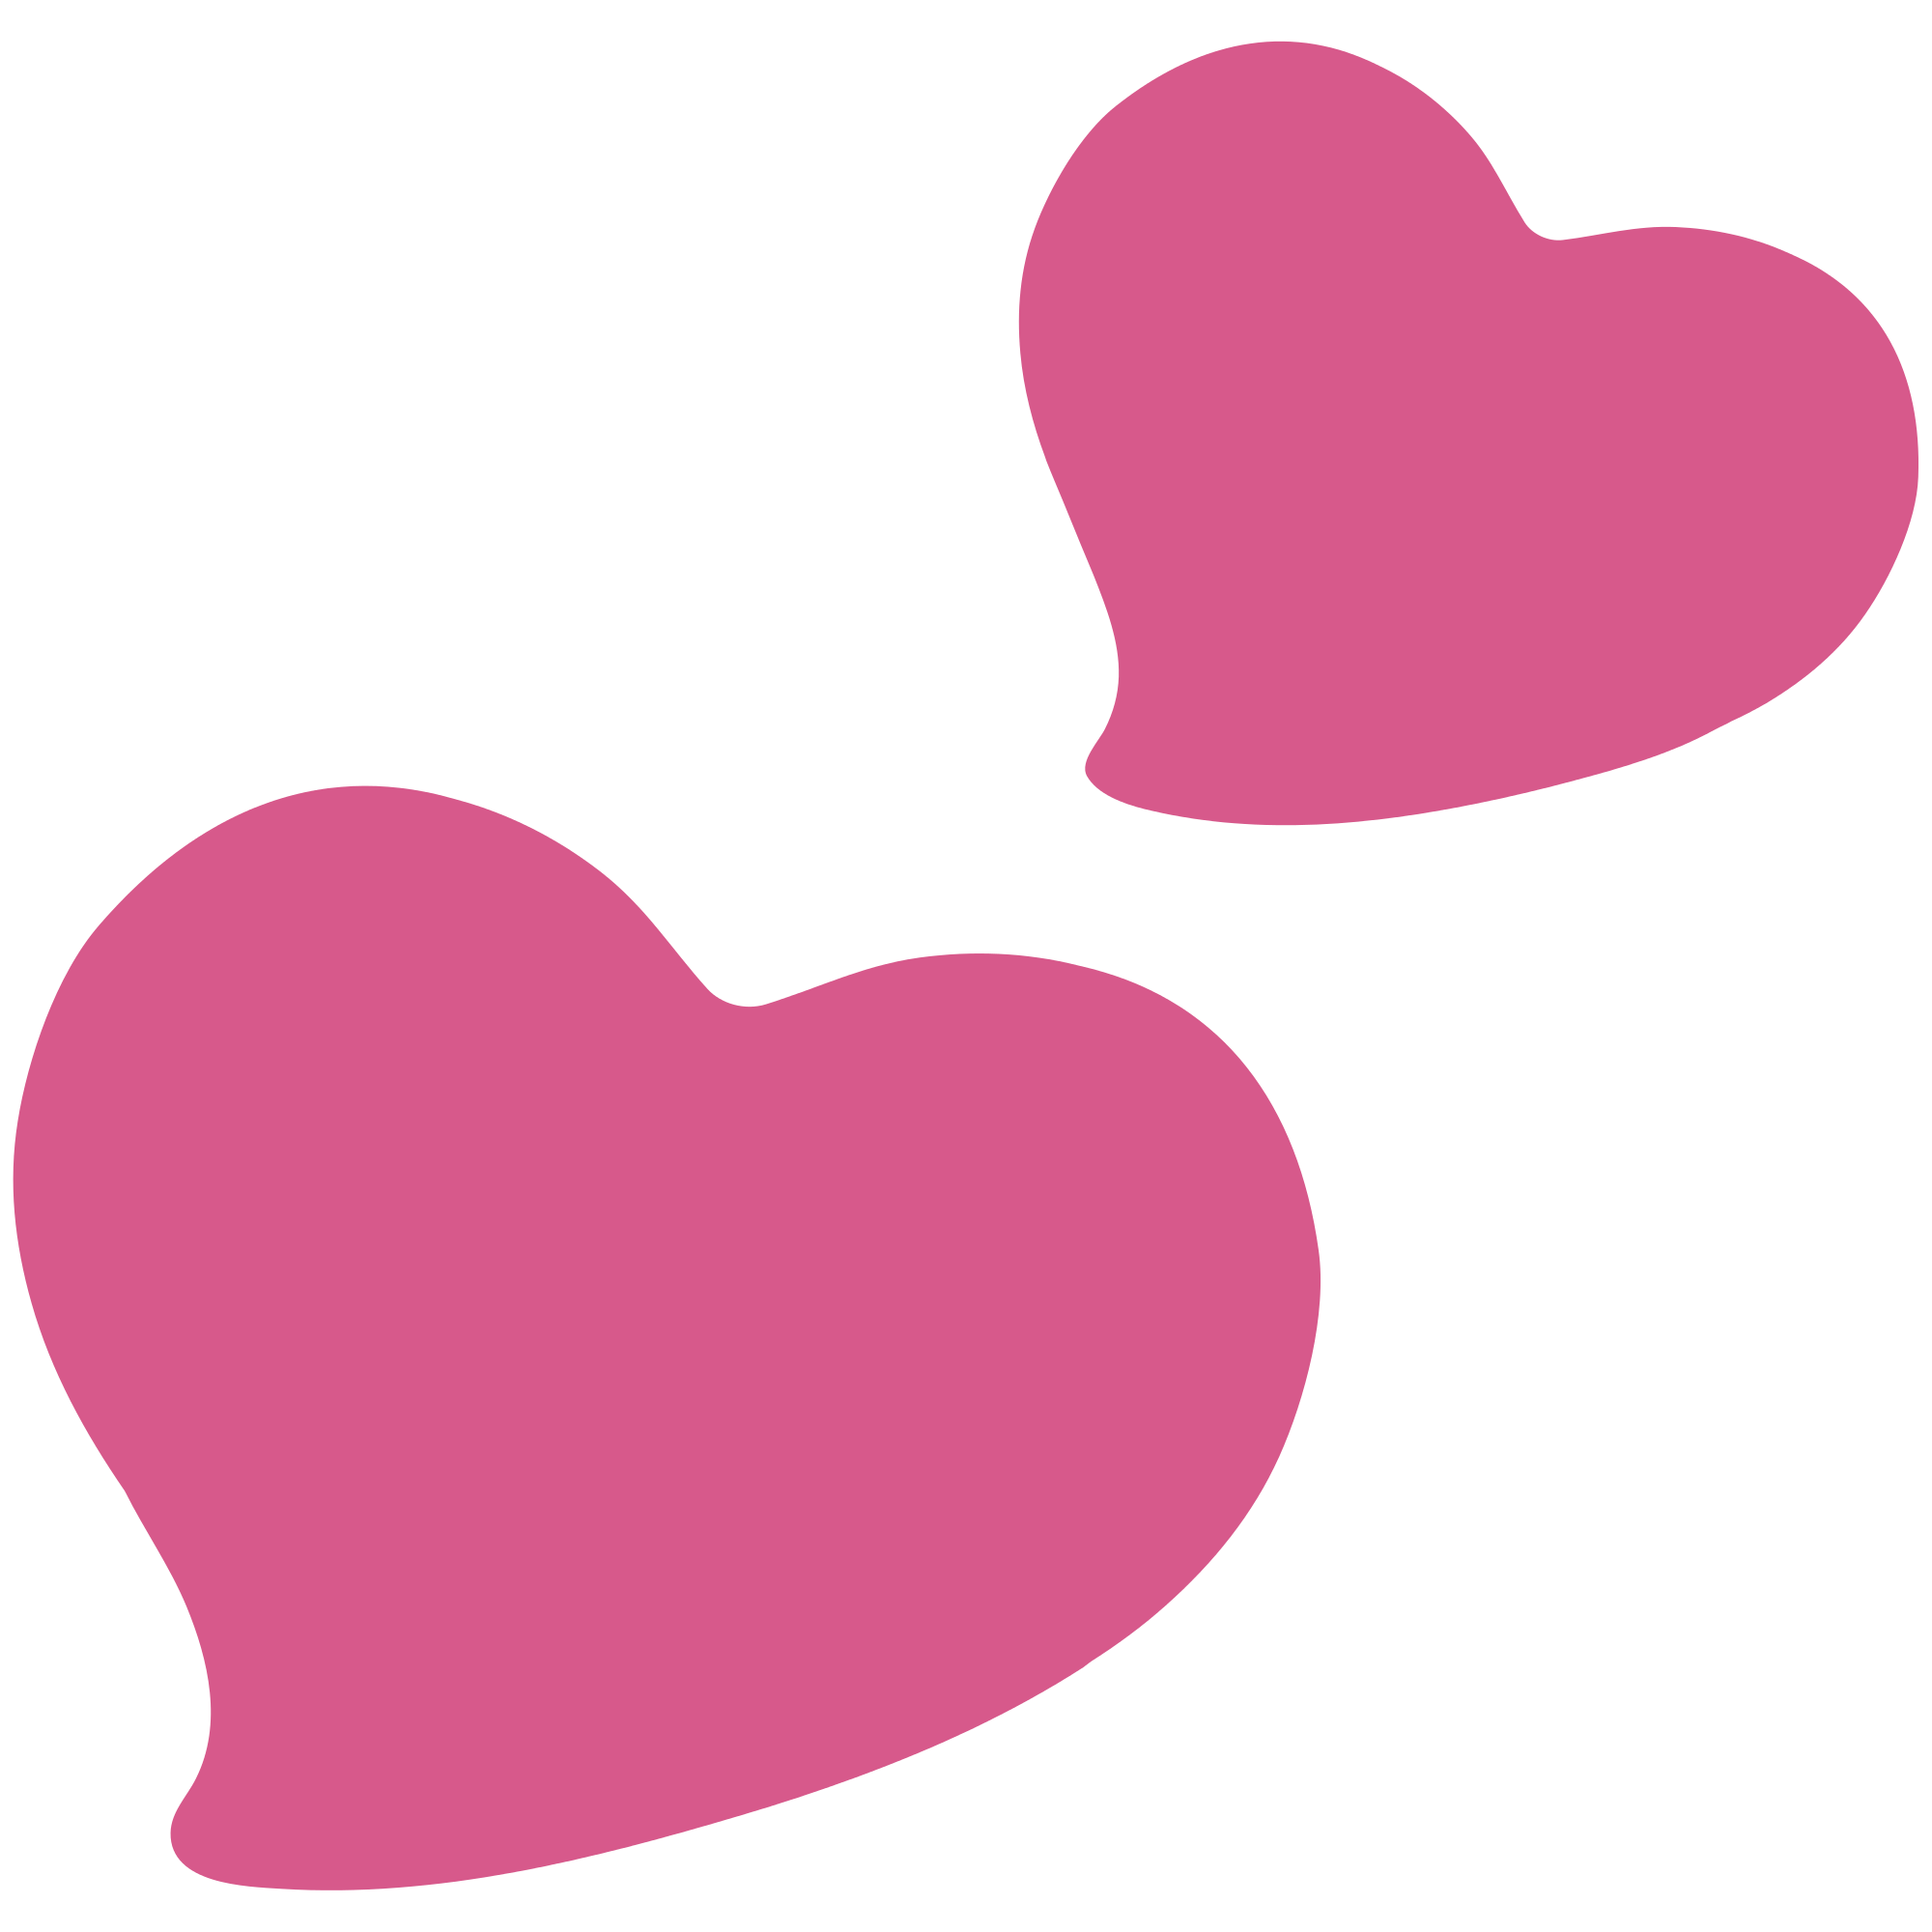 heart emoji clipart - photo #36